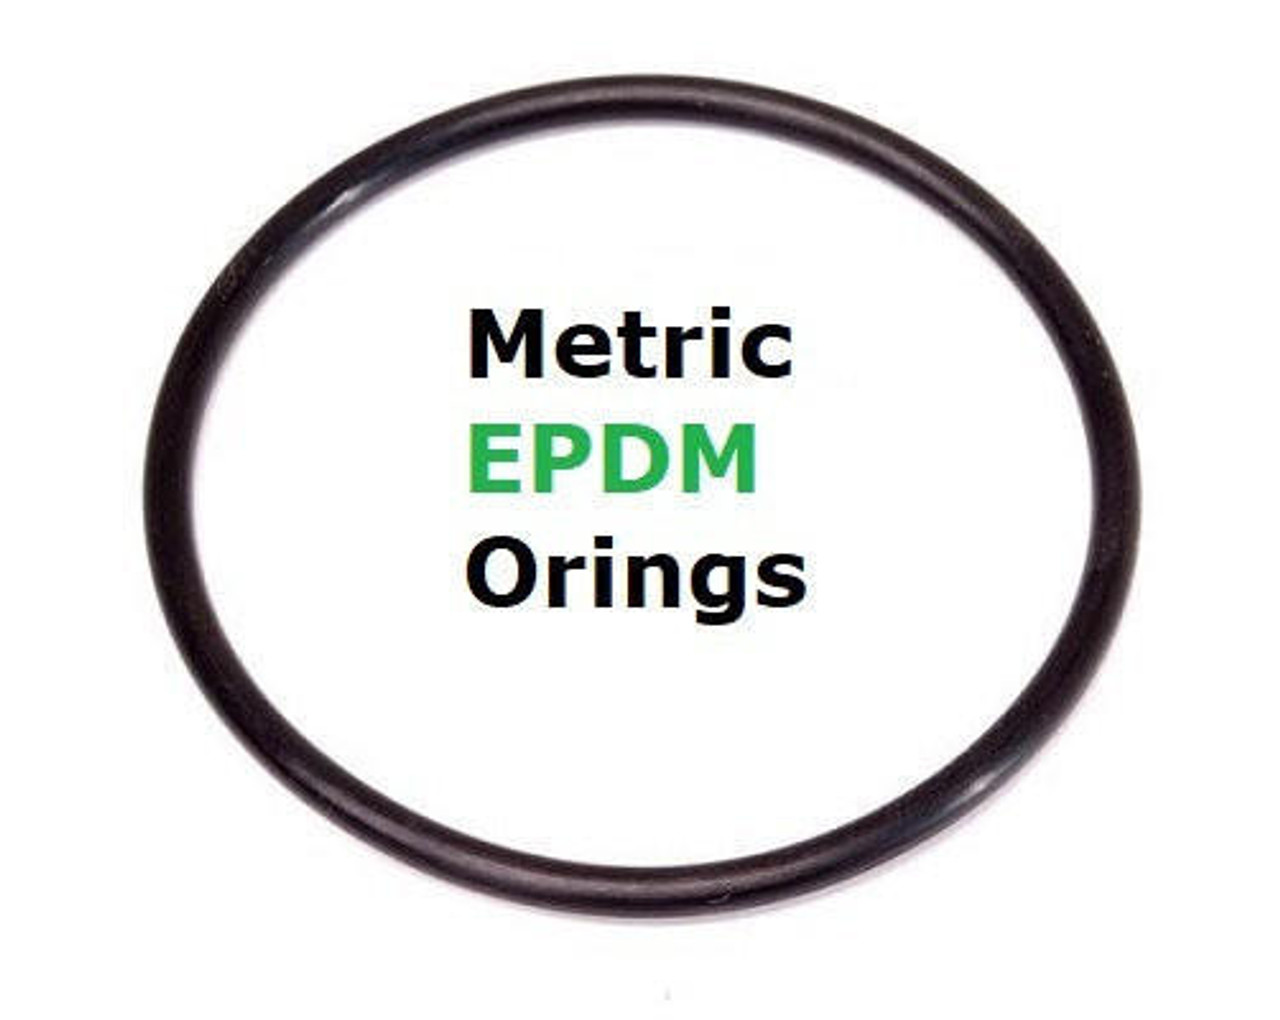 Metric EPDM 70  Orings  2.5 x 1mm  Minimum 10 pcs